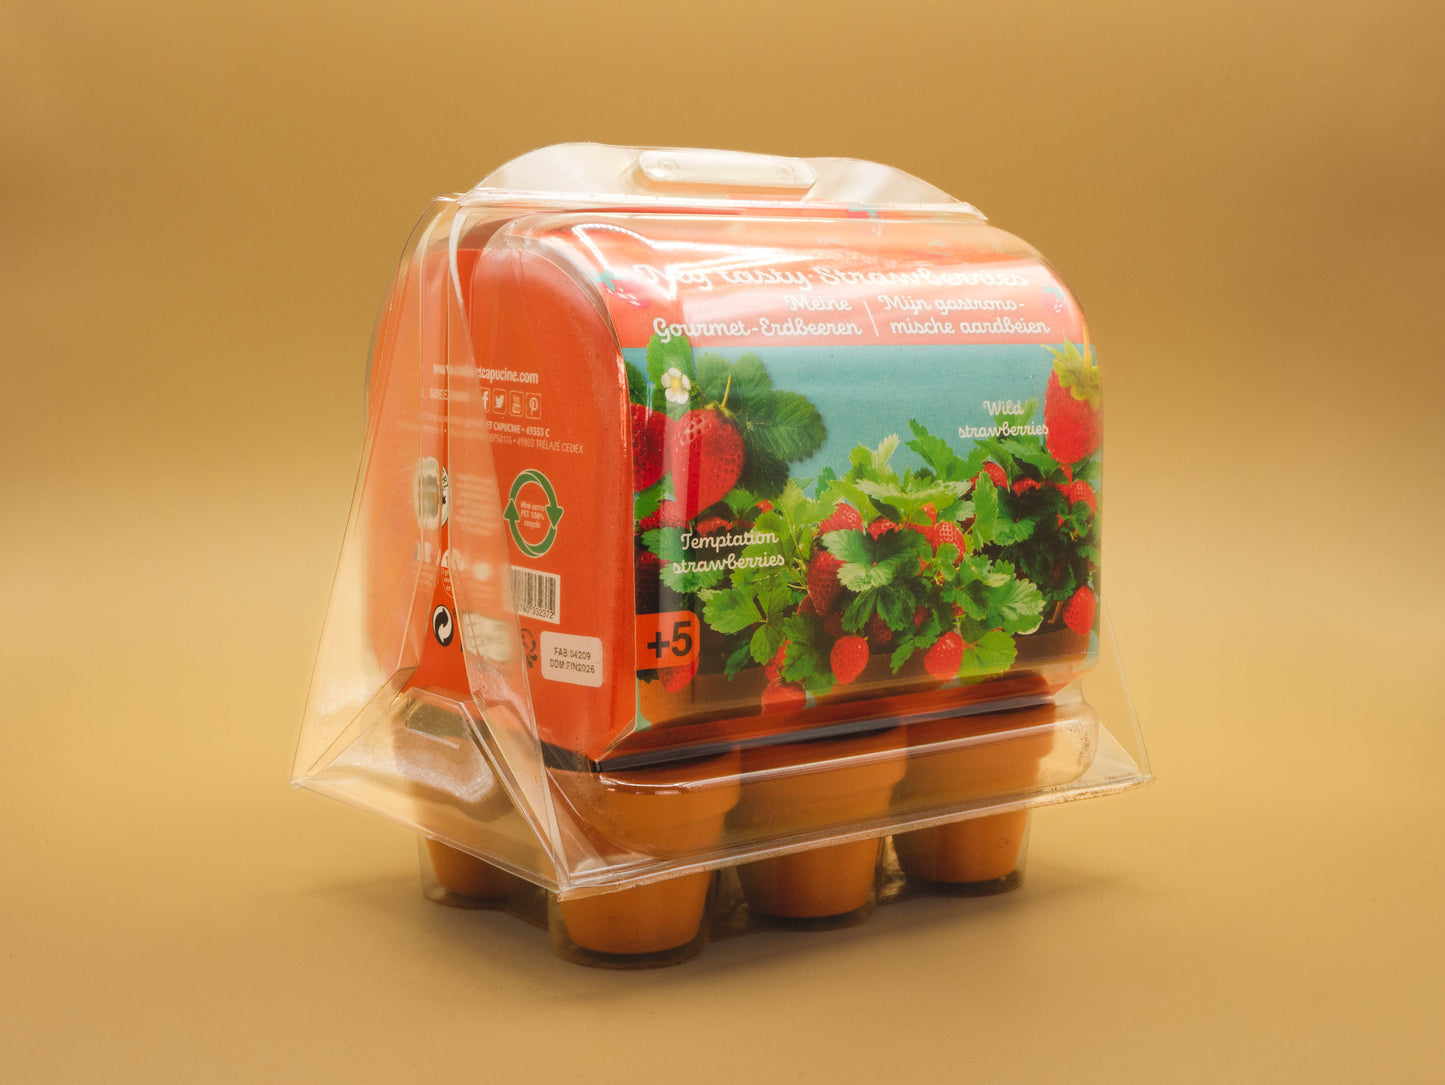 Mini-Greenhouse - Strawberries